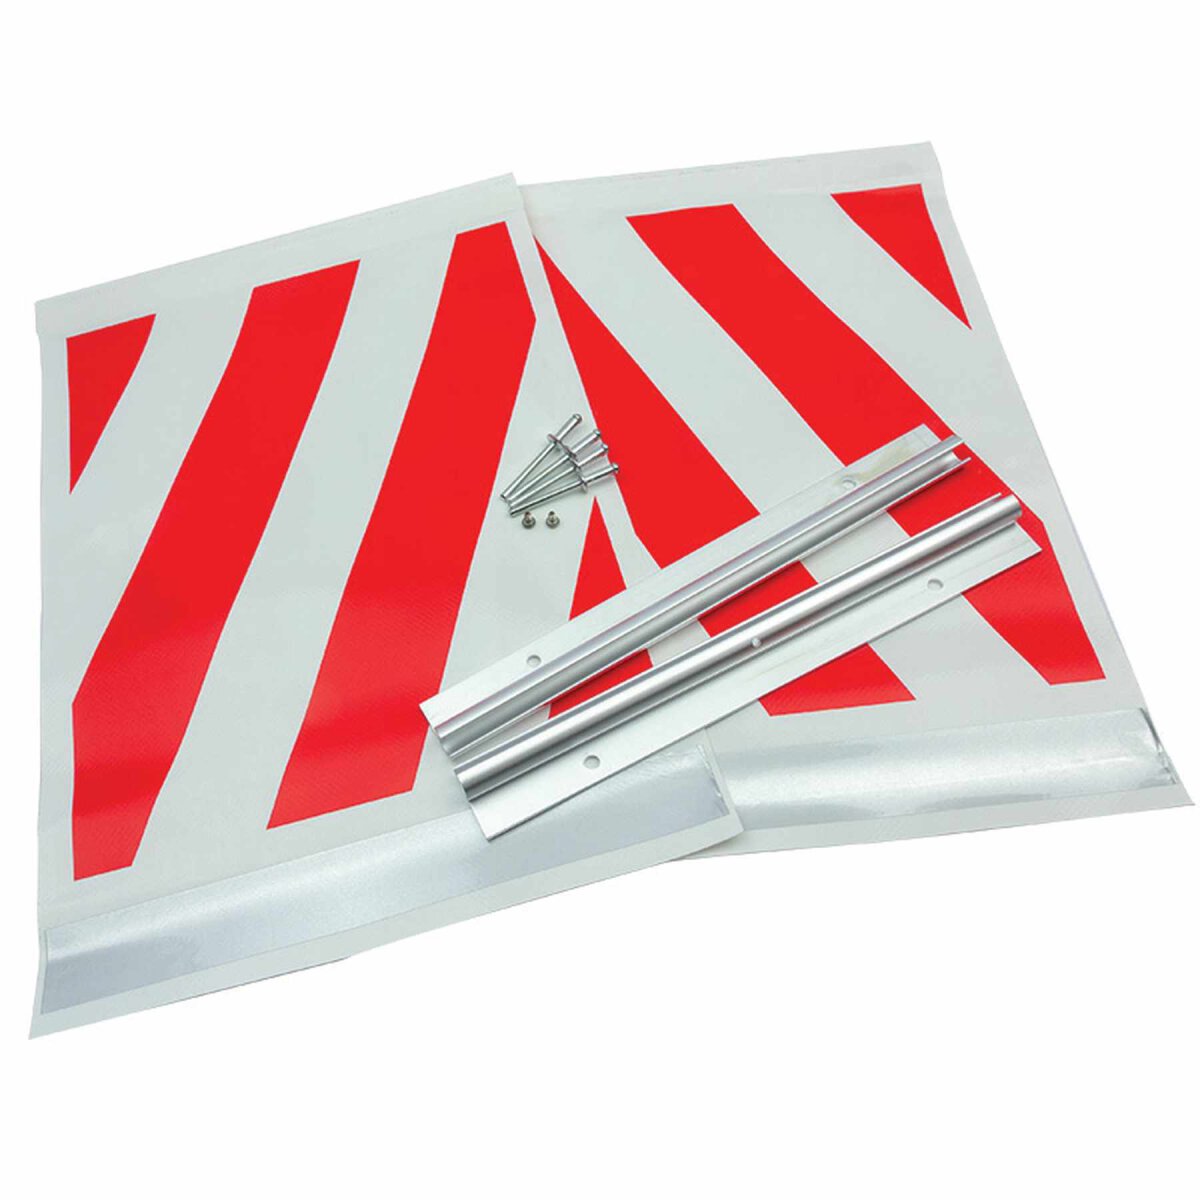 HACO Satz Warnflagge Rot/Weiß HACO Dhollandia - 6003456H, 17,99 €